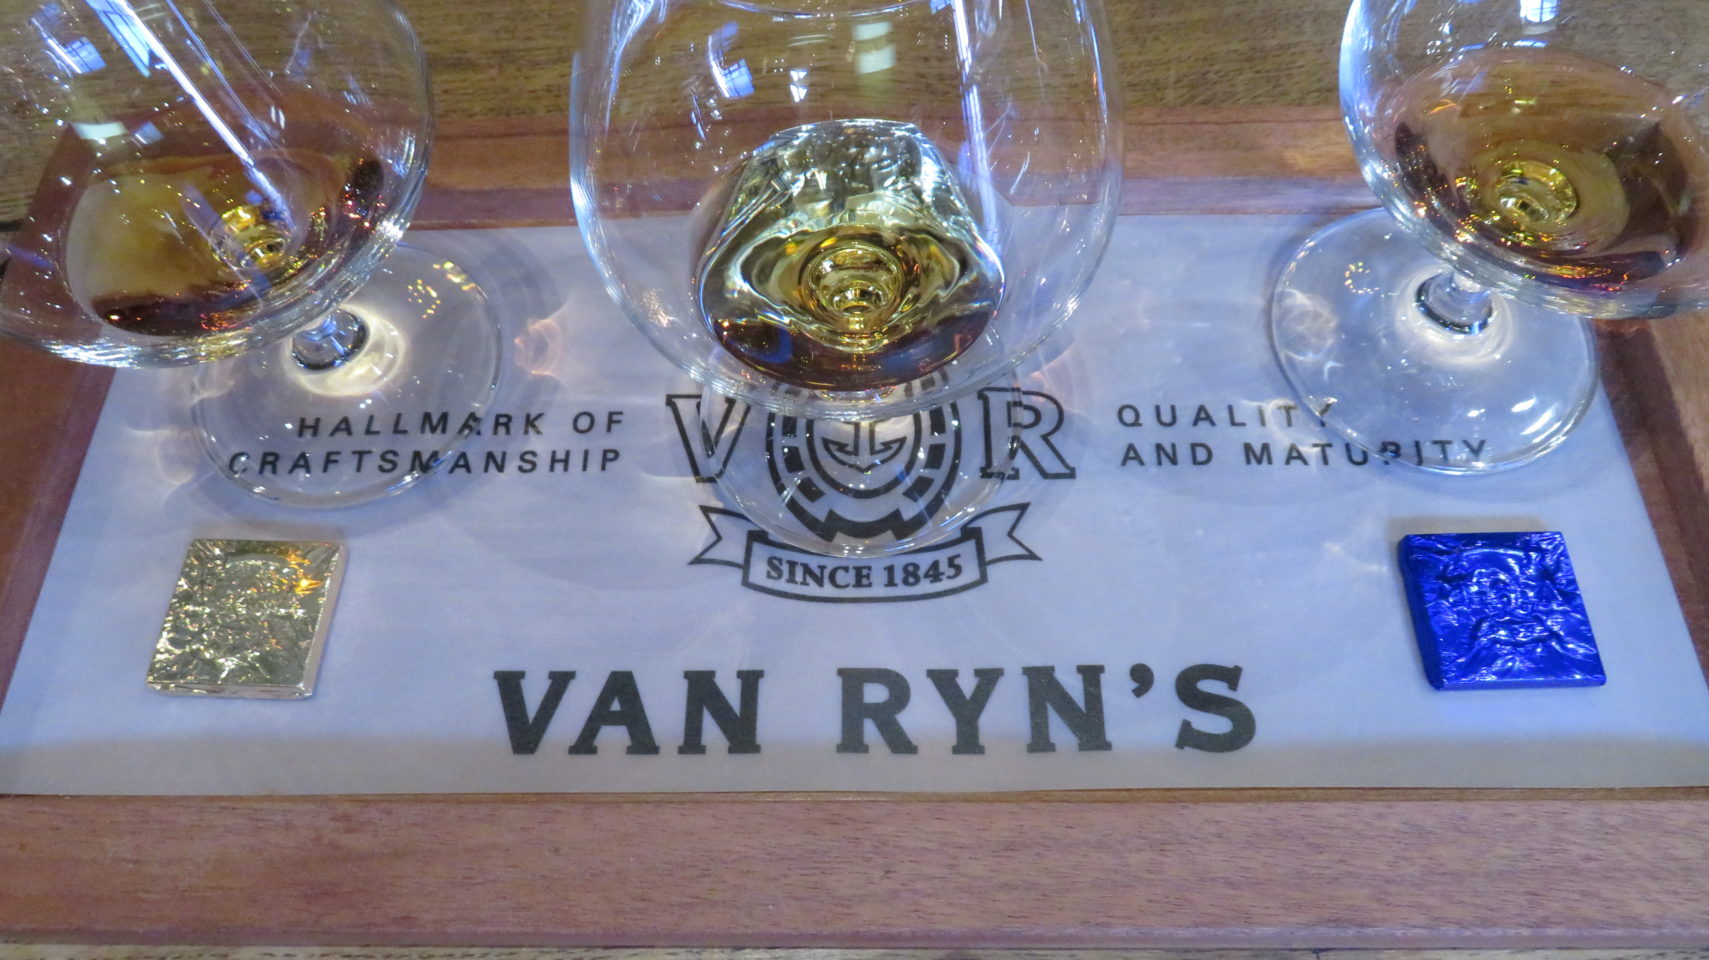 Van Ryn's Distillery in Stellenbosch, South Africa